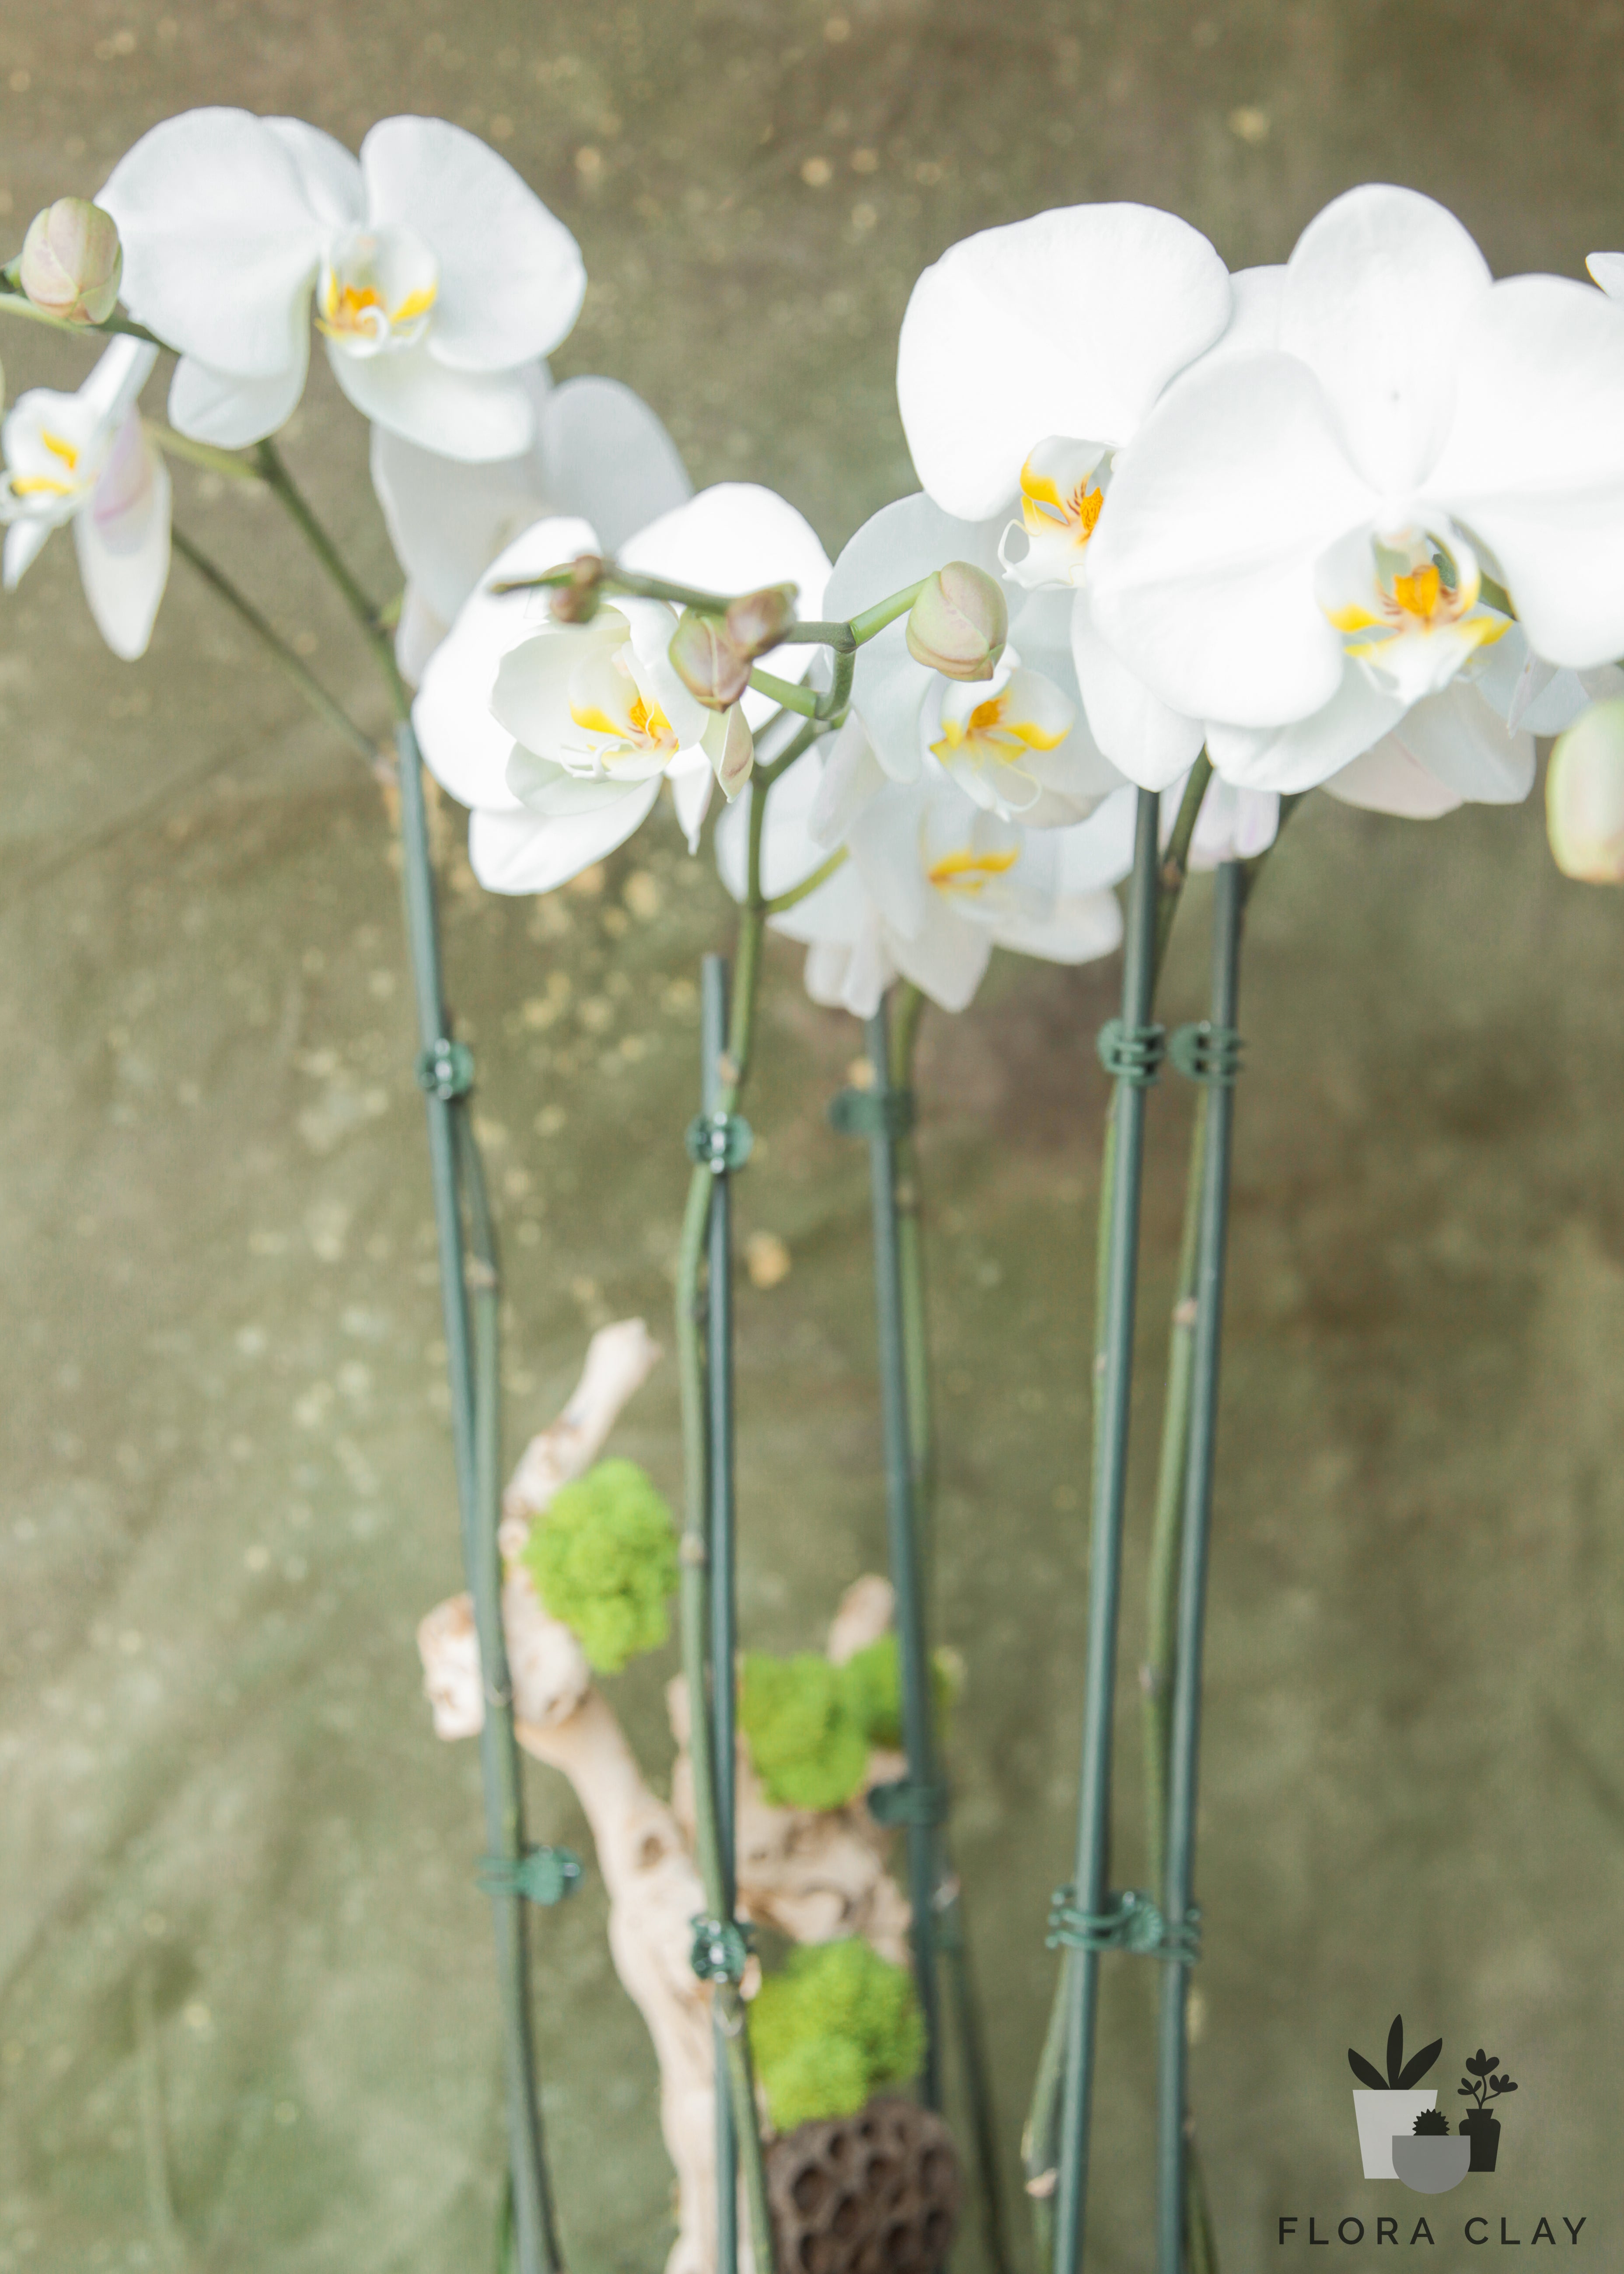 stardust-orchid-arrangement-floraclay-2.jpg